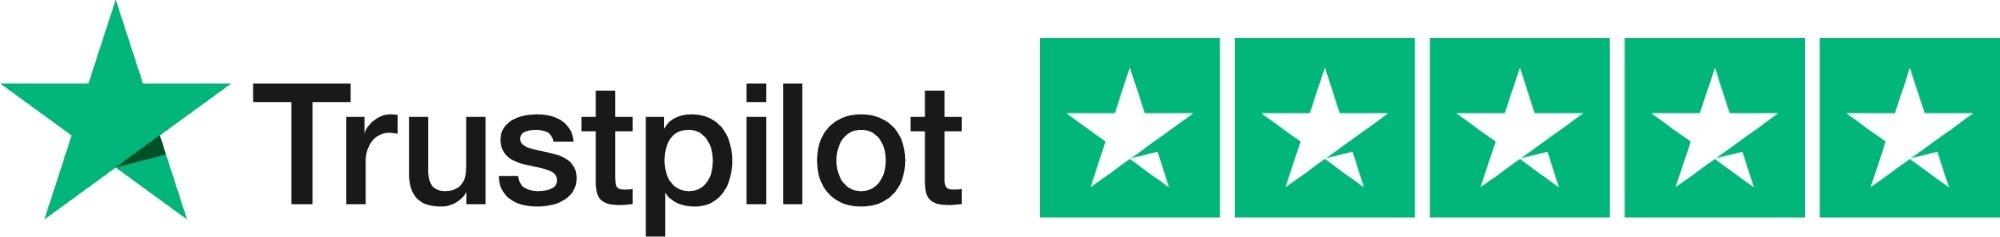 trustpilot logo stars